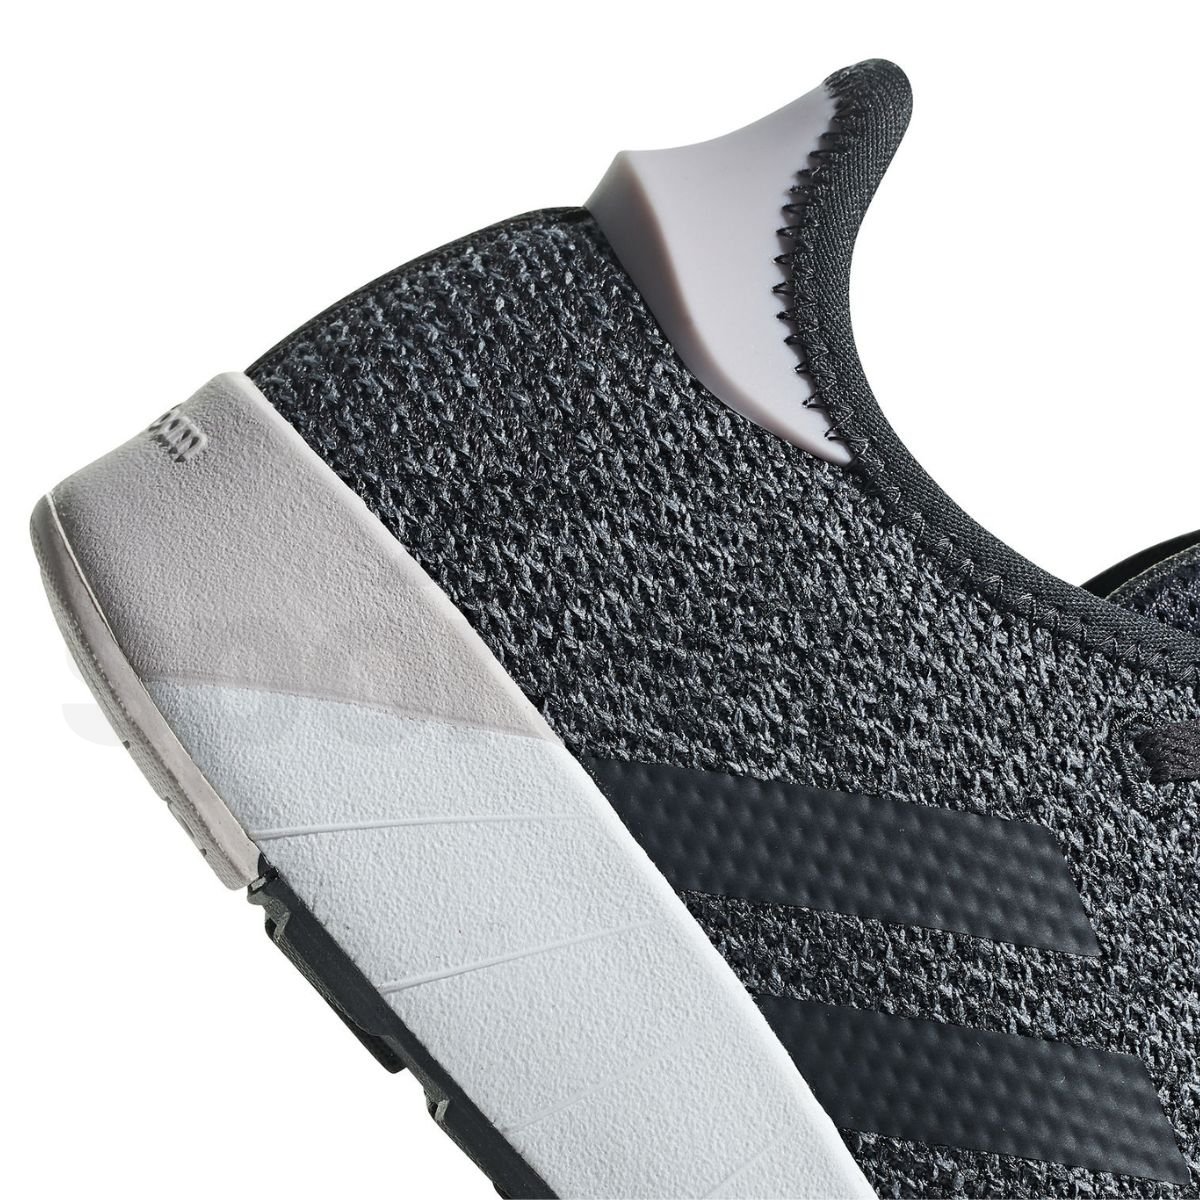 Obuv Adidas Questar X BYD W - šedá/černá